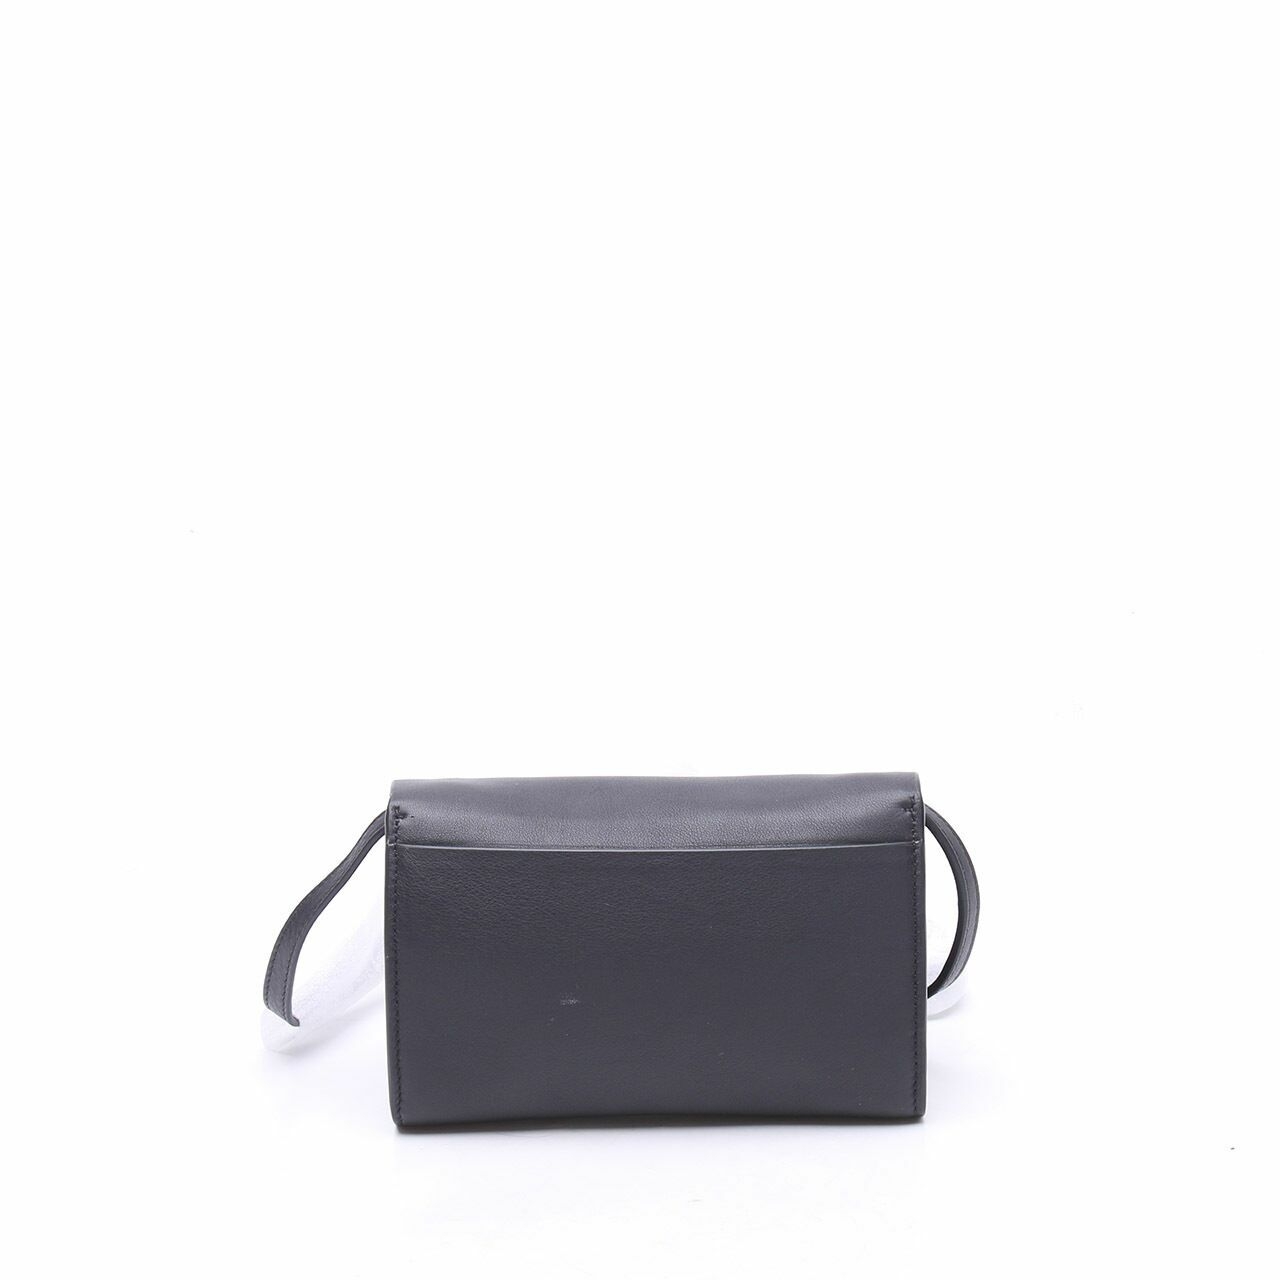 Michael Kors Black Leather Sling Bag